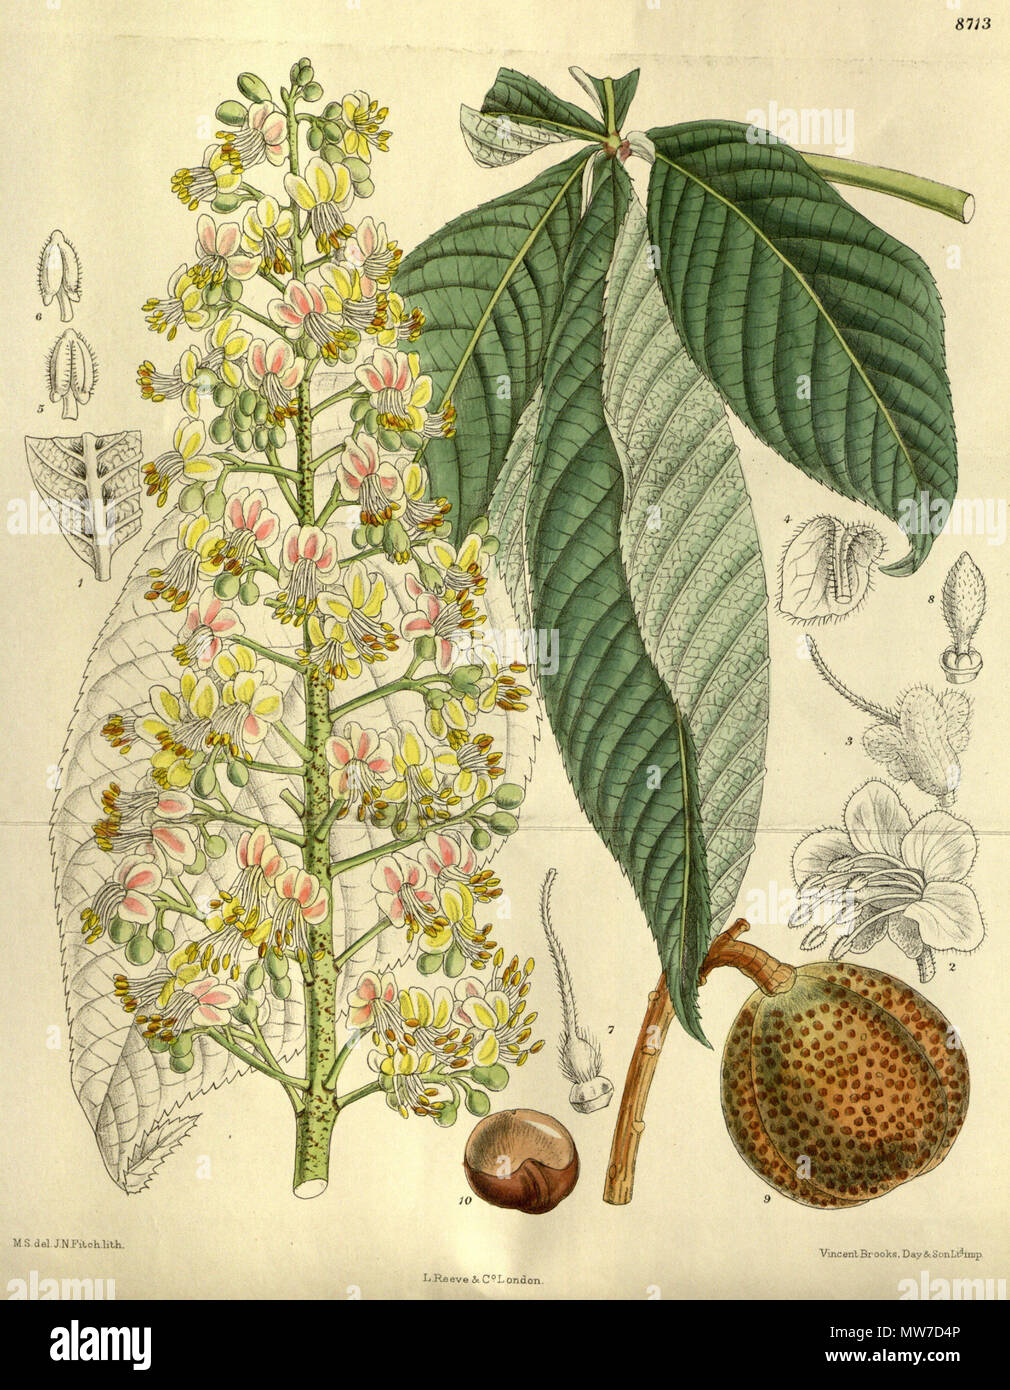 . Aesculus turbinata, Sapindaceae . 1917. M.S. del., J.N.Fitch lith. 29 Aesculus turbinata 143-8713 Stock Photo